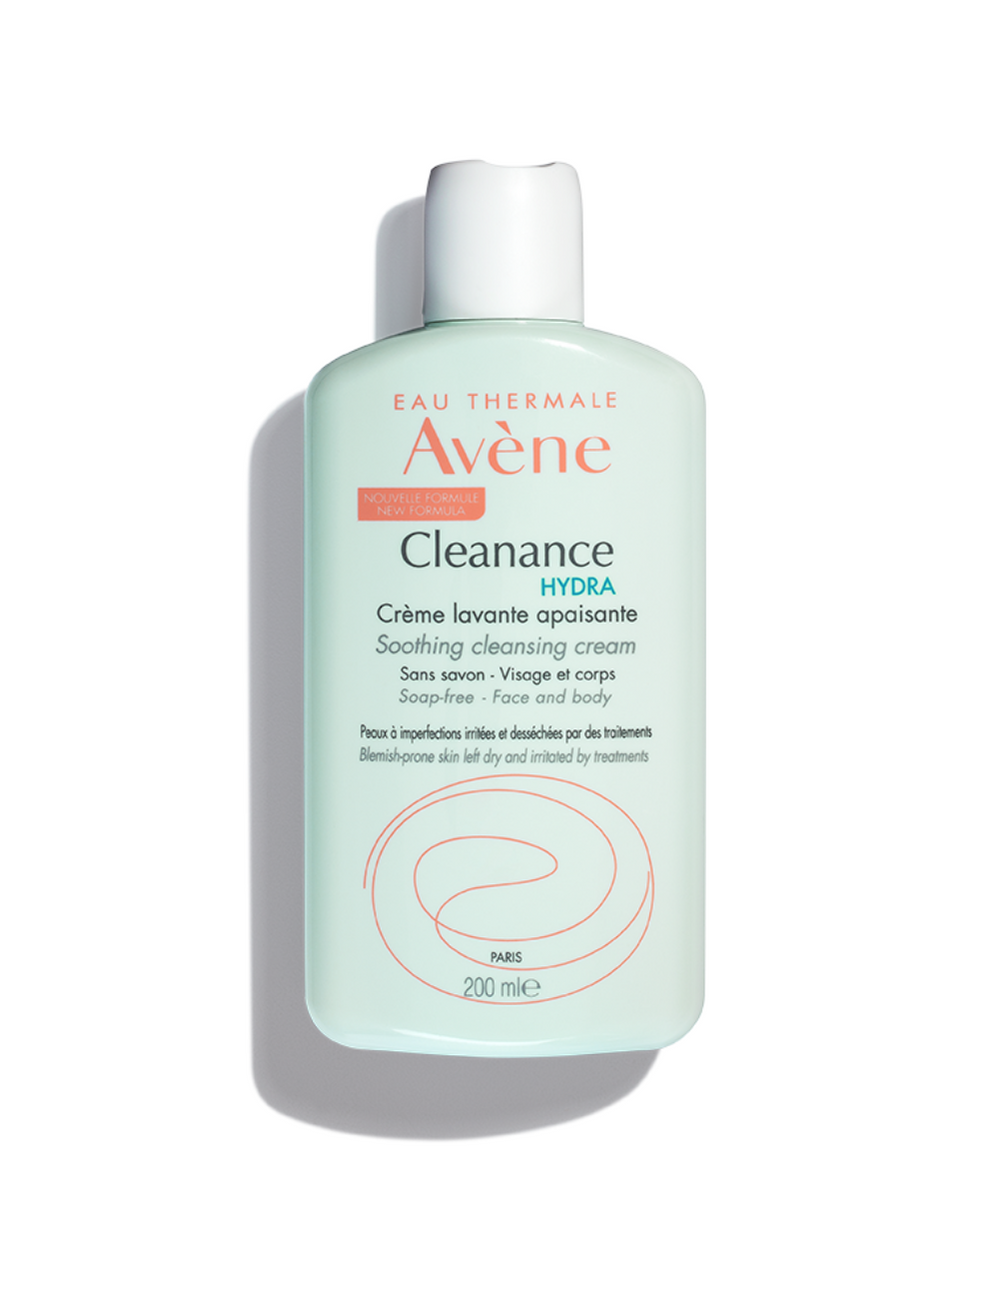 Cleanance Hydra Cleansing Cream